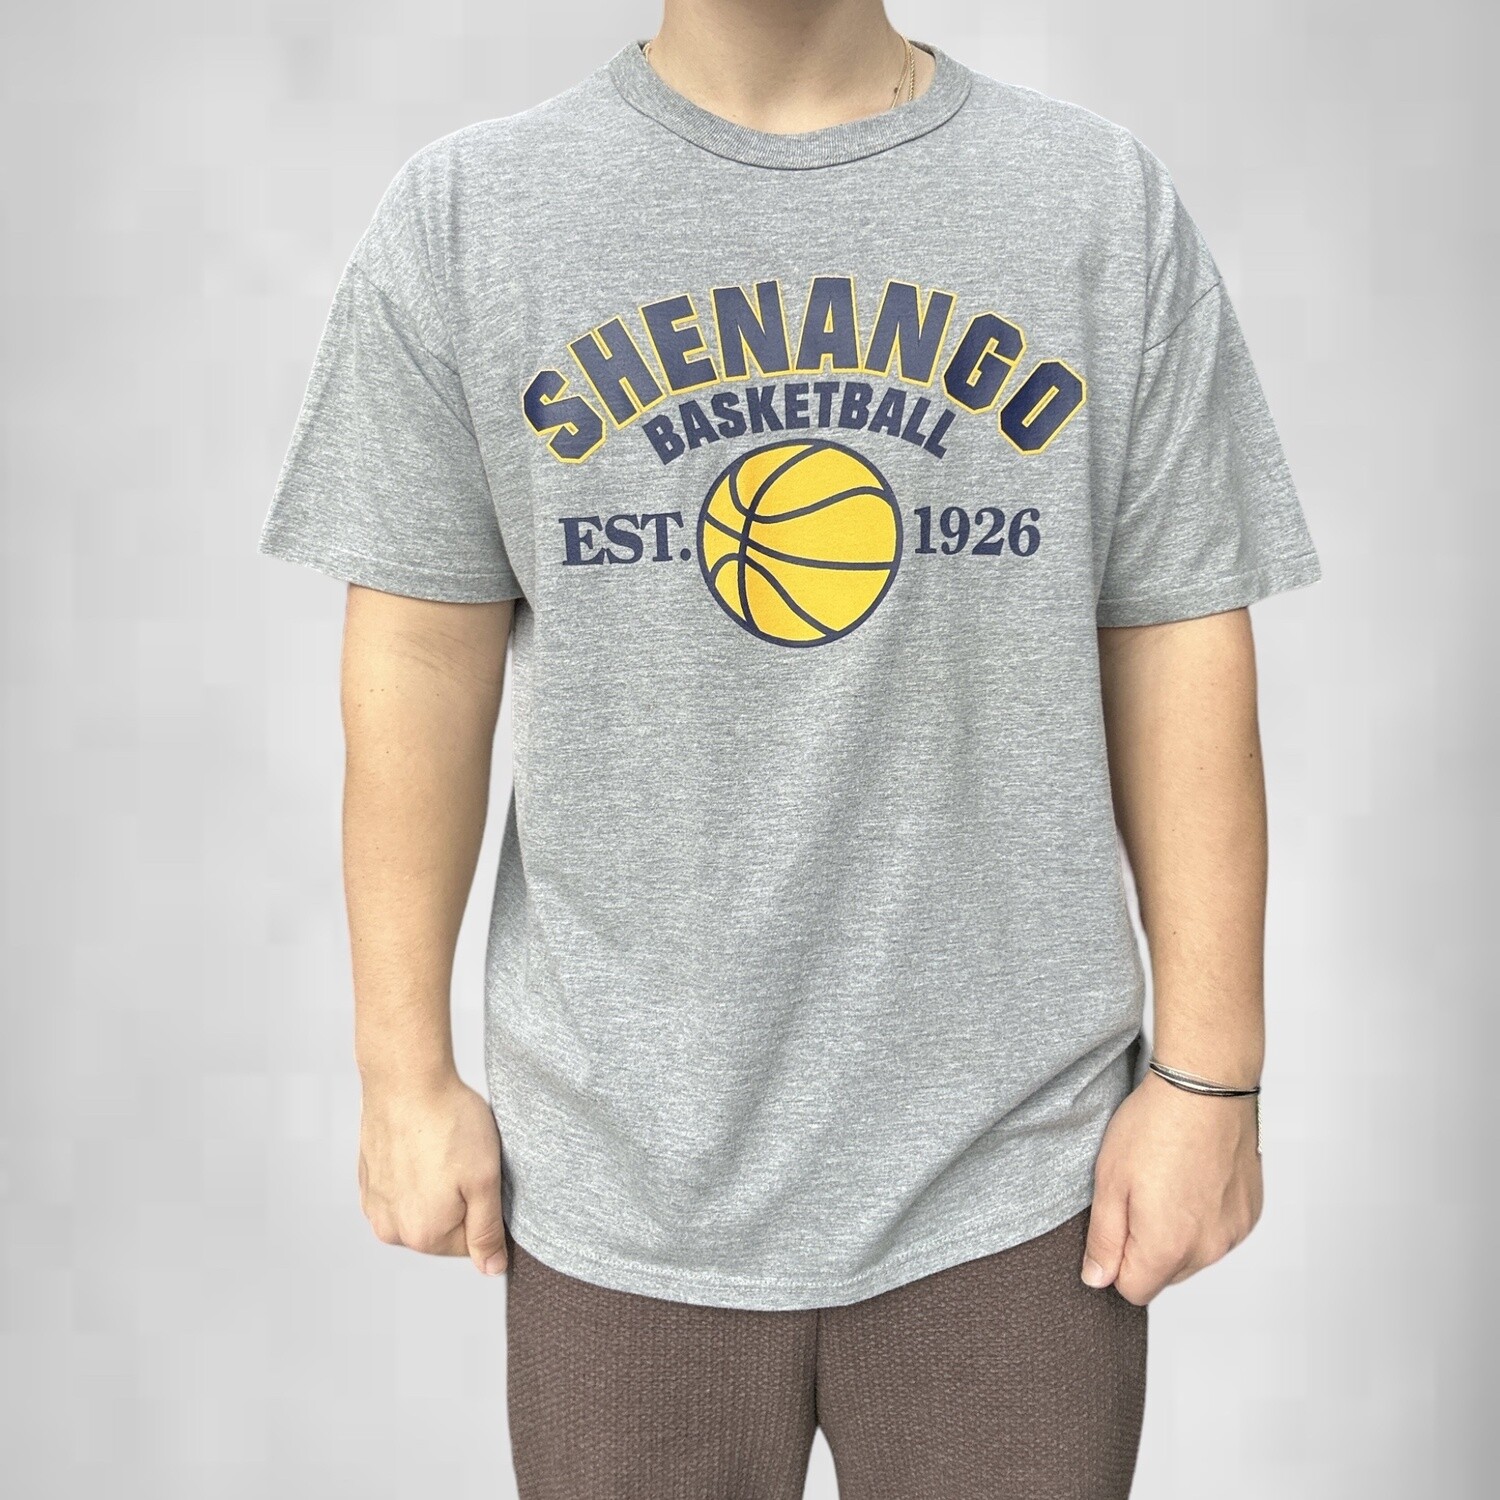 Vintage Shenango Basketball Tee, Color: Grey, Size: XL, Style: College